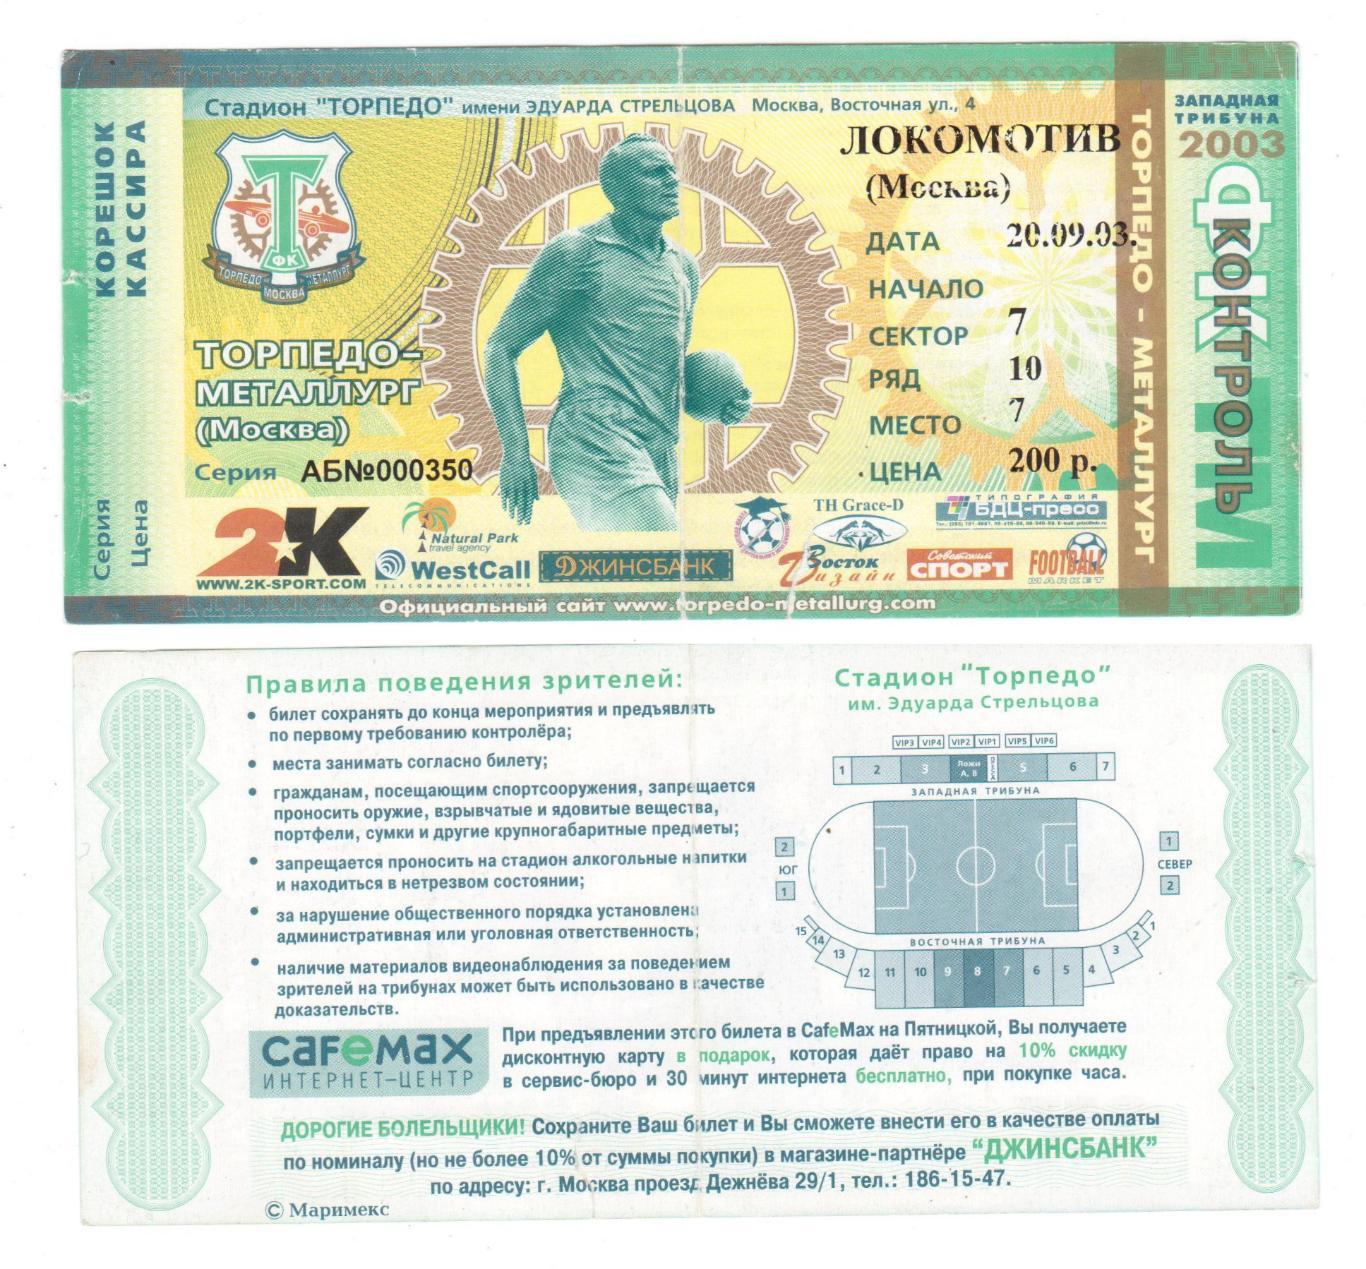 Билет, футбол Торпедо-Металлург (Москва) - Локомотив (Москва), 20.09.2003 25 тур